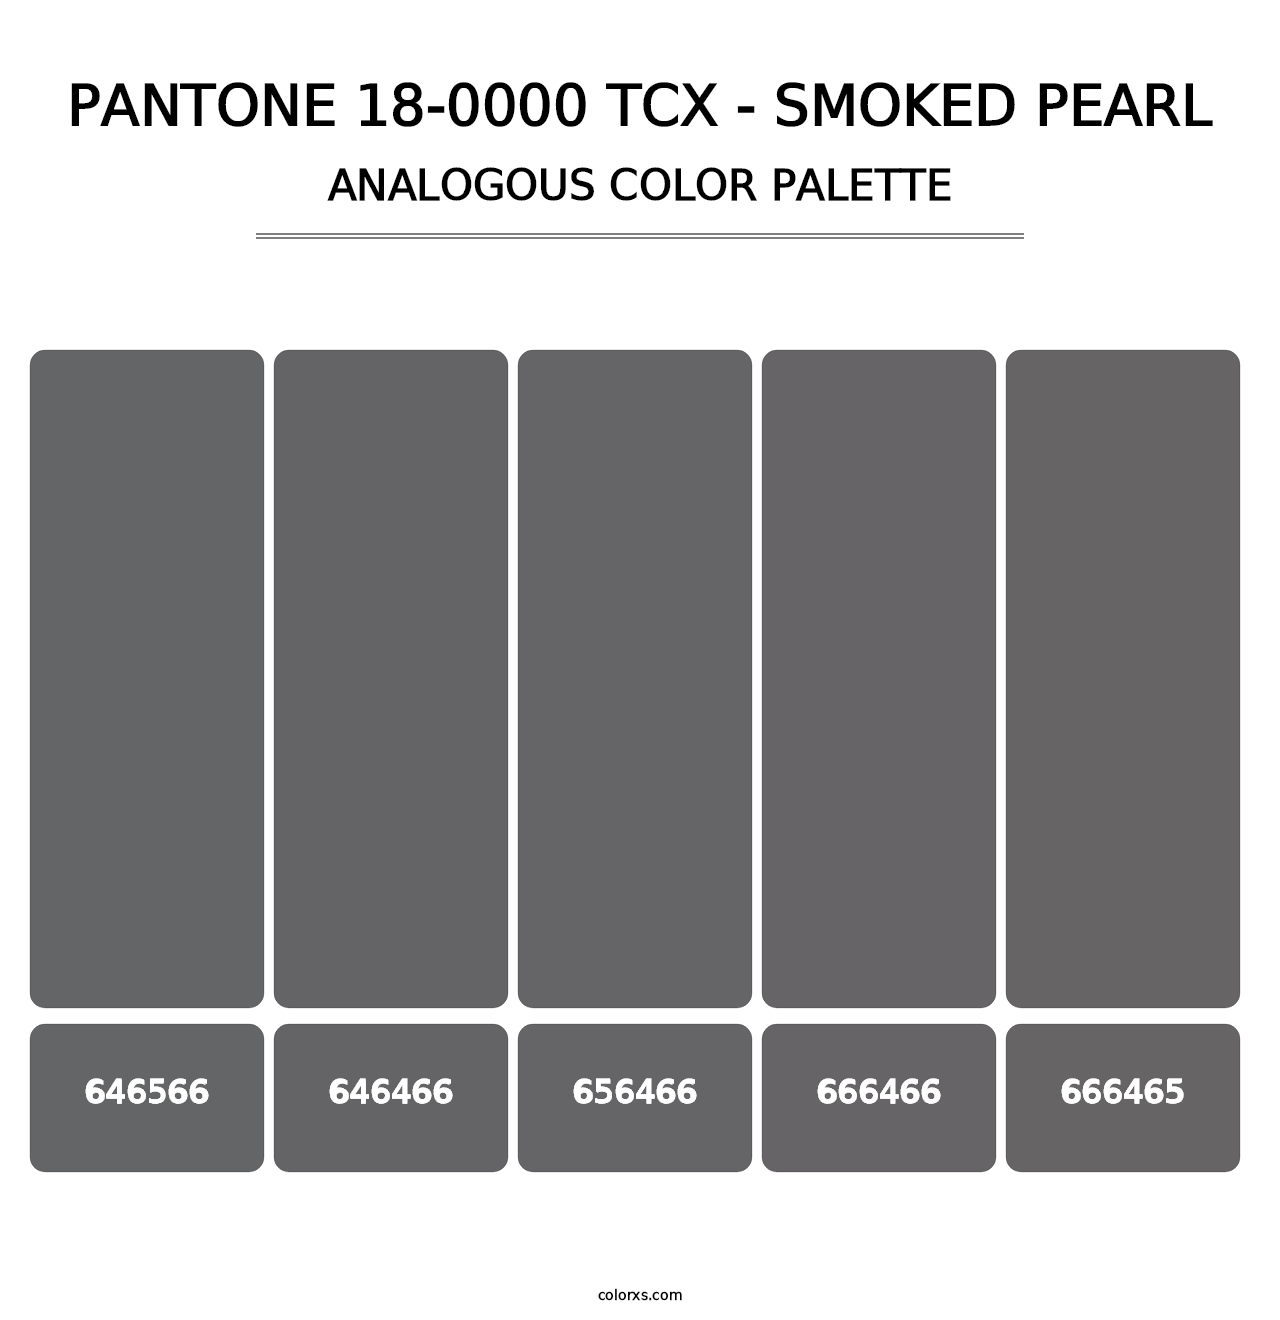 PANTONE 18-0000 TCX - Smoked Pearl - Analogous Color Palette